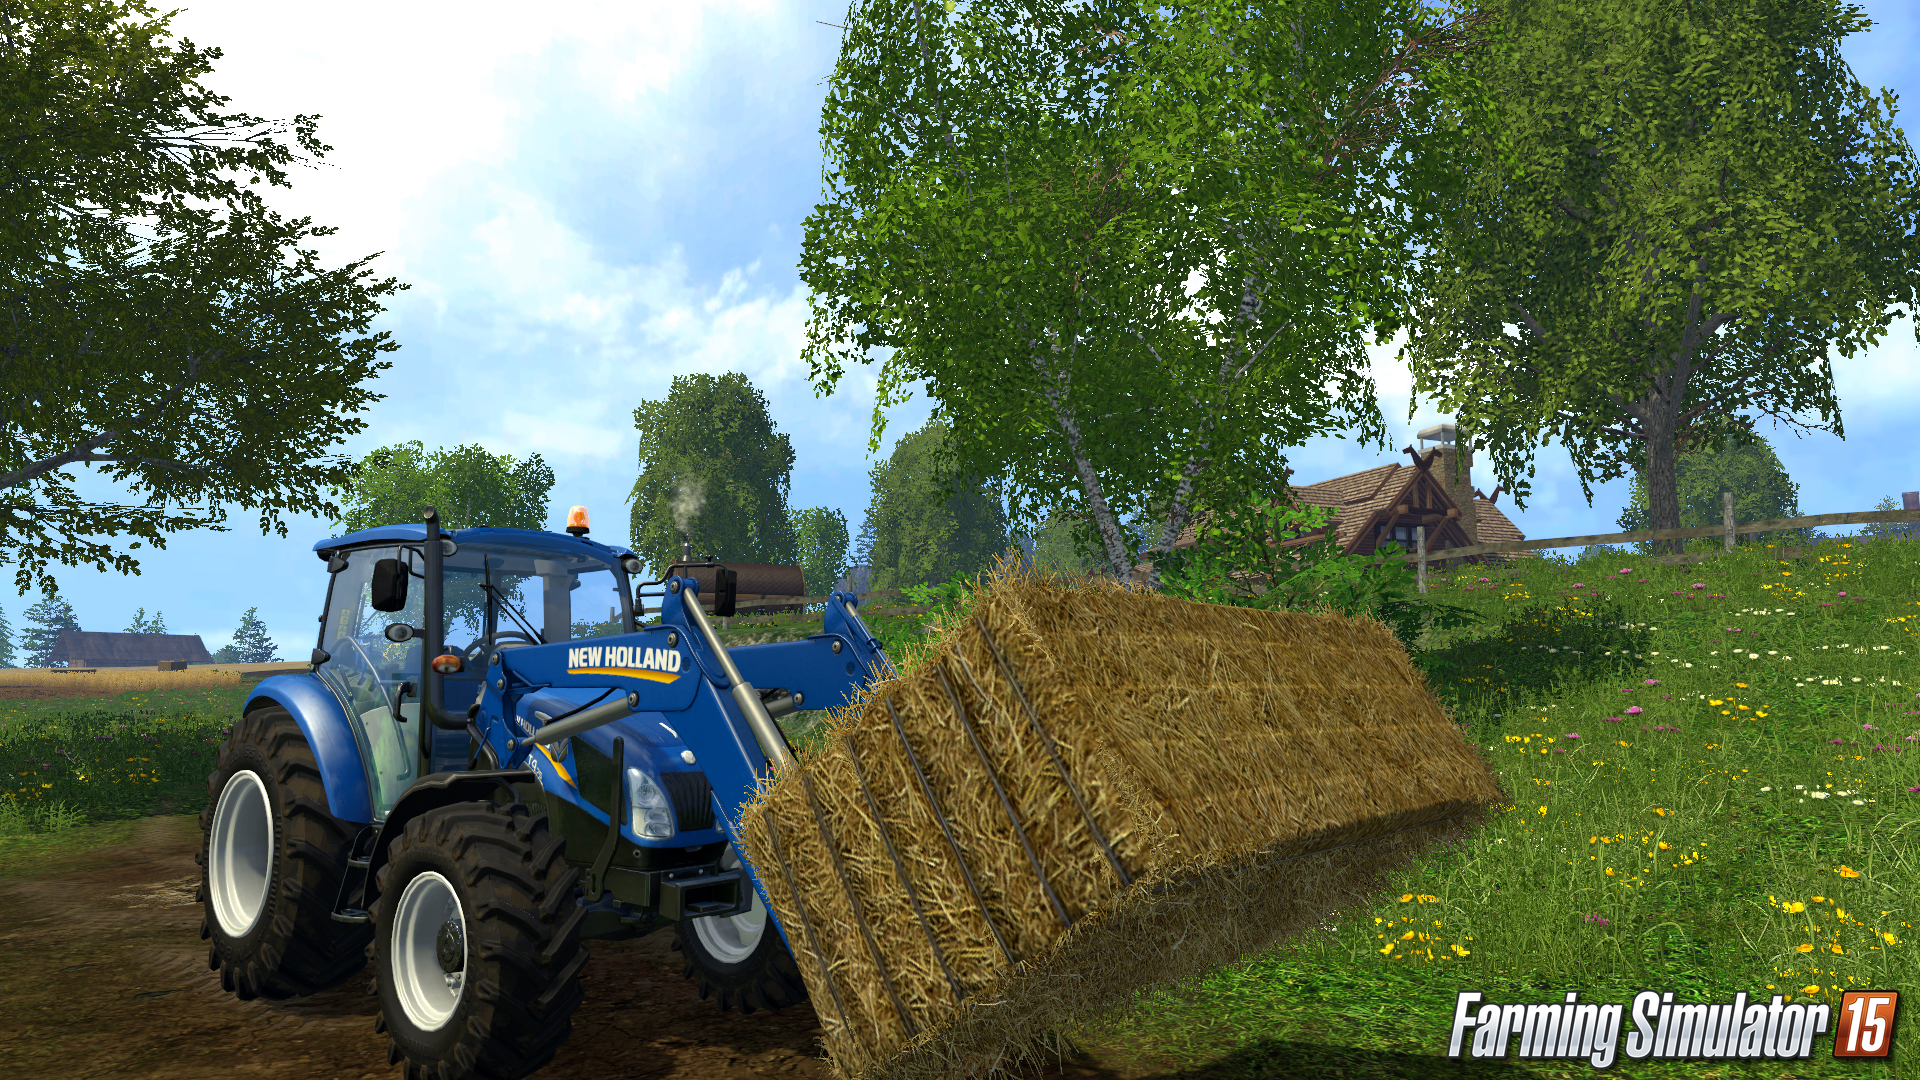 Farming Simulator 15 HD wallpapers, Desktop wallpaper - most viewed